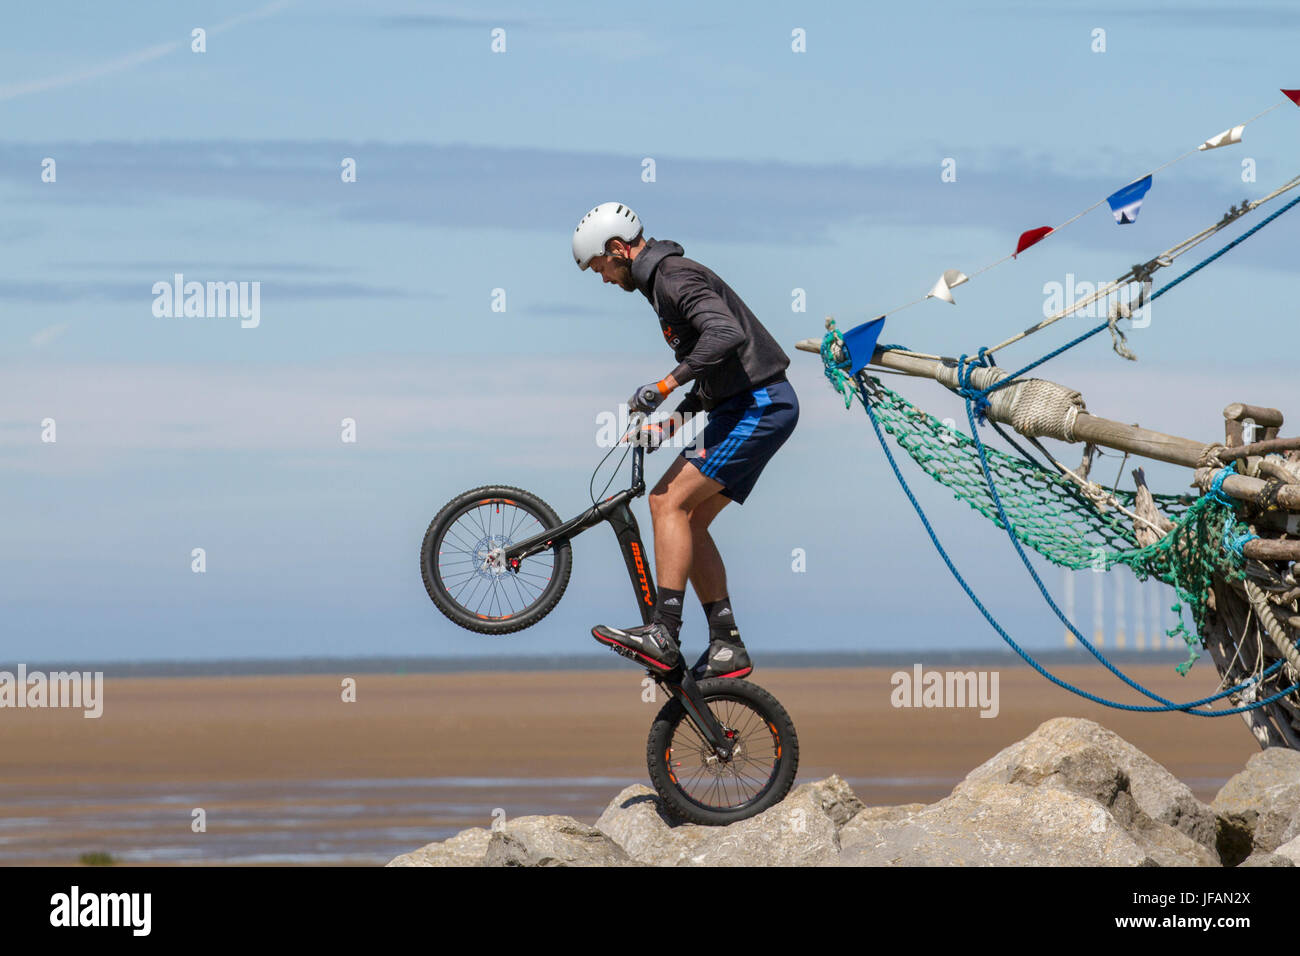 Crazy bmx bike tricks hi-res stock photography and images - Alamy